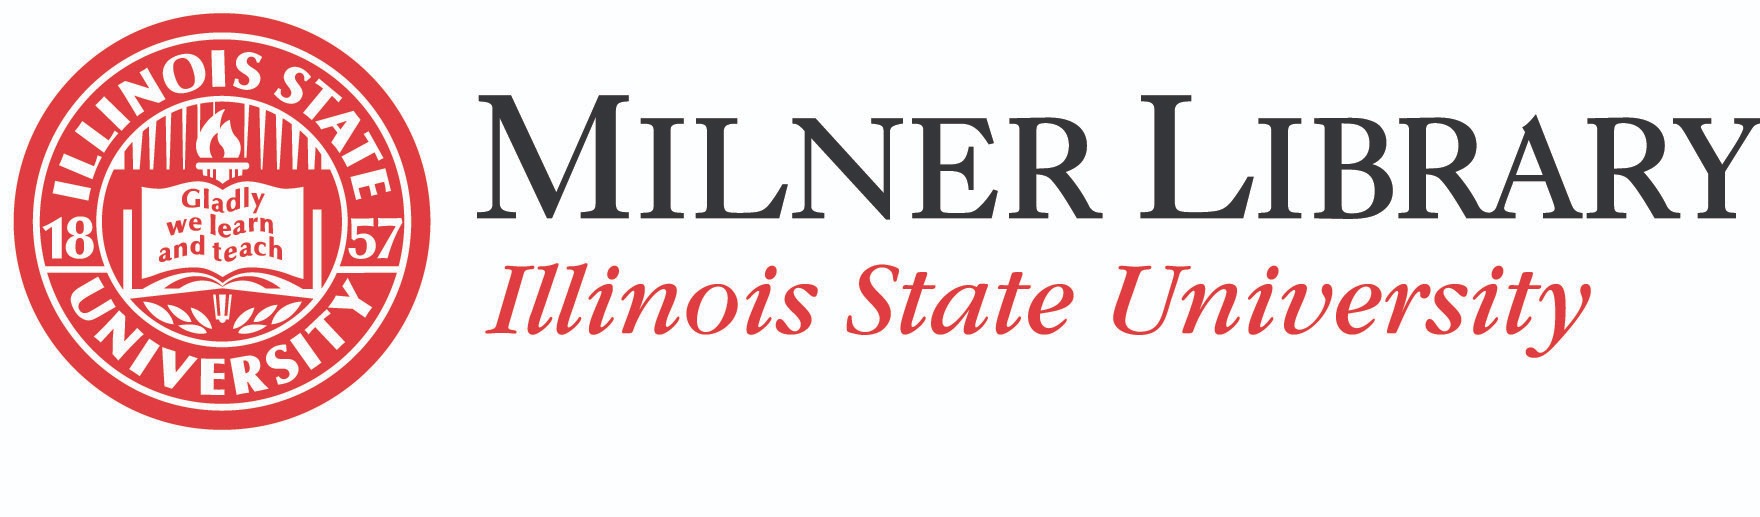 Milner Library. Illinois State University